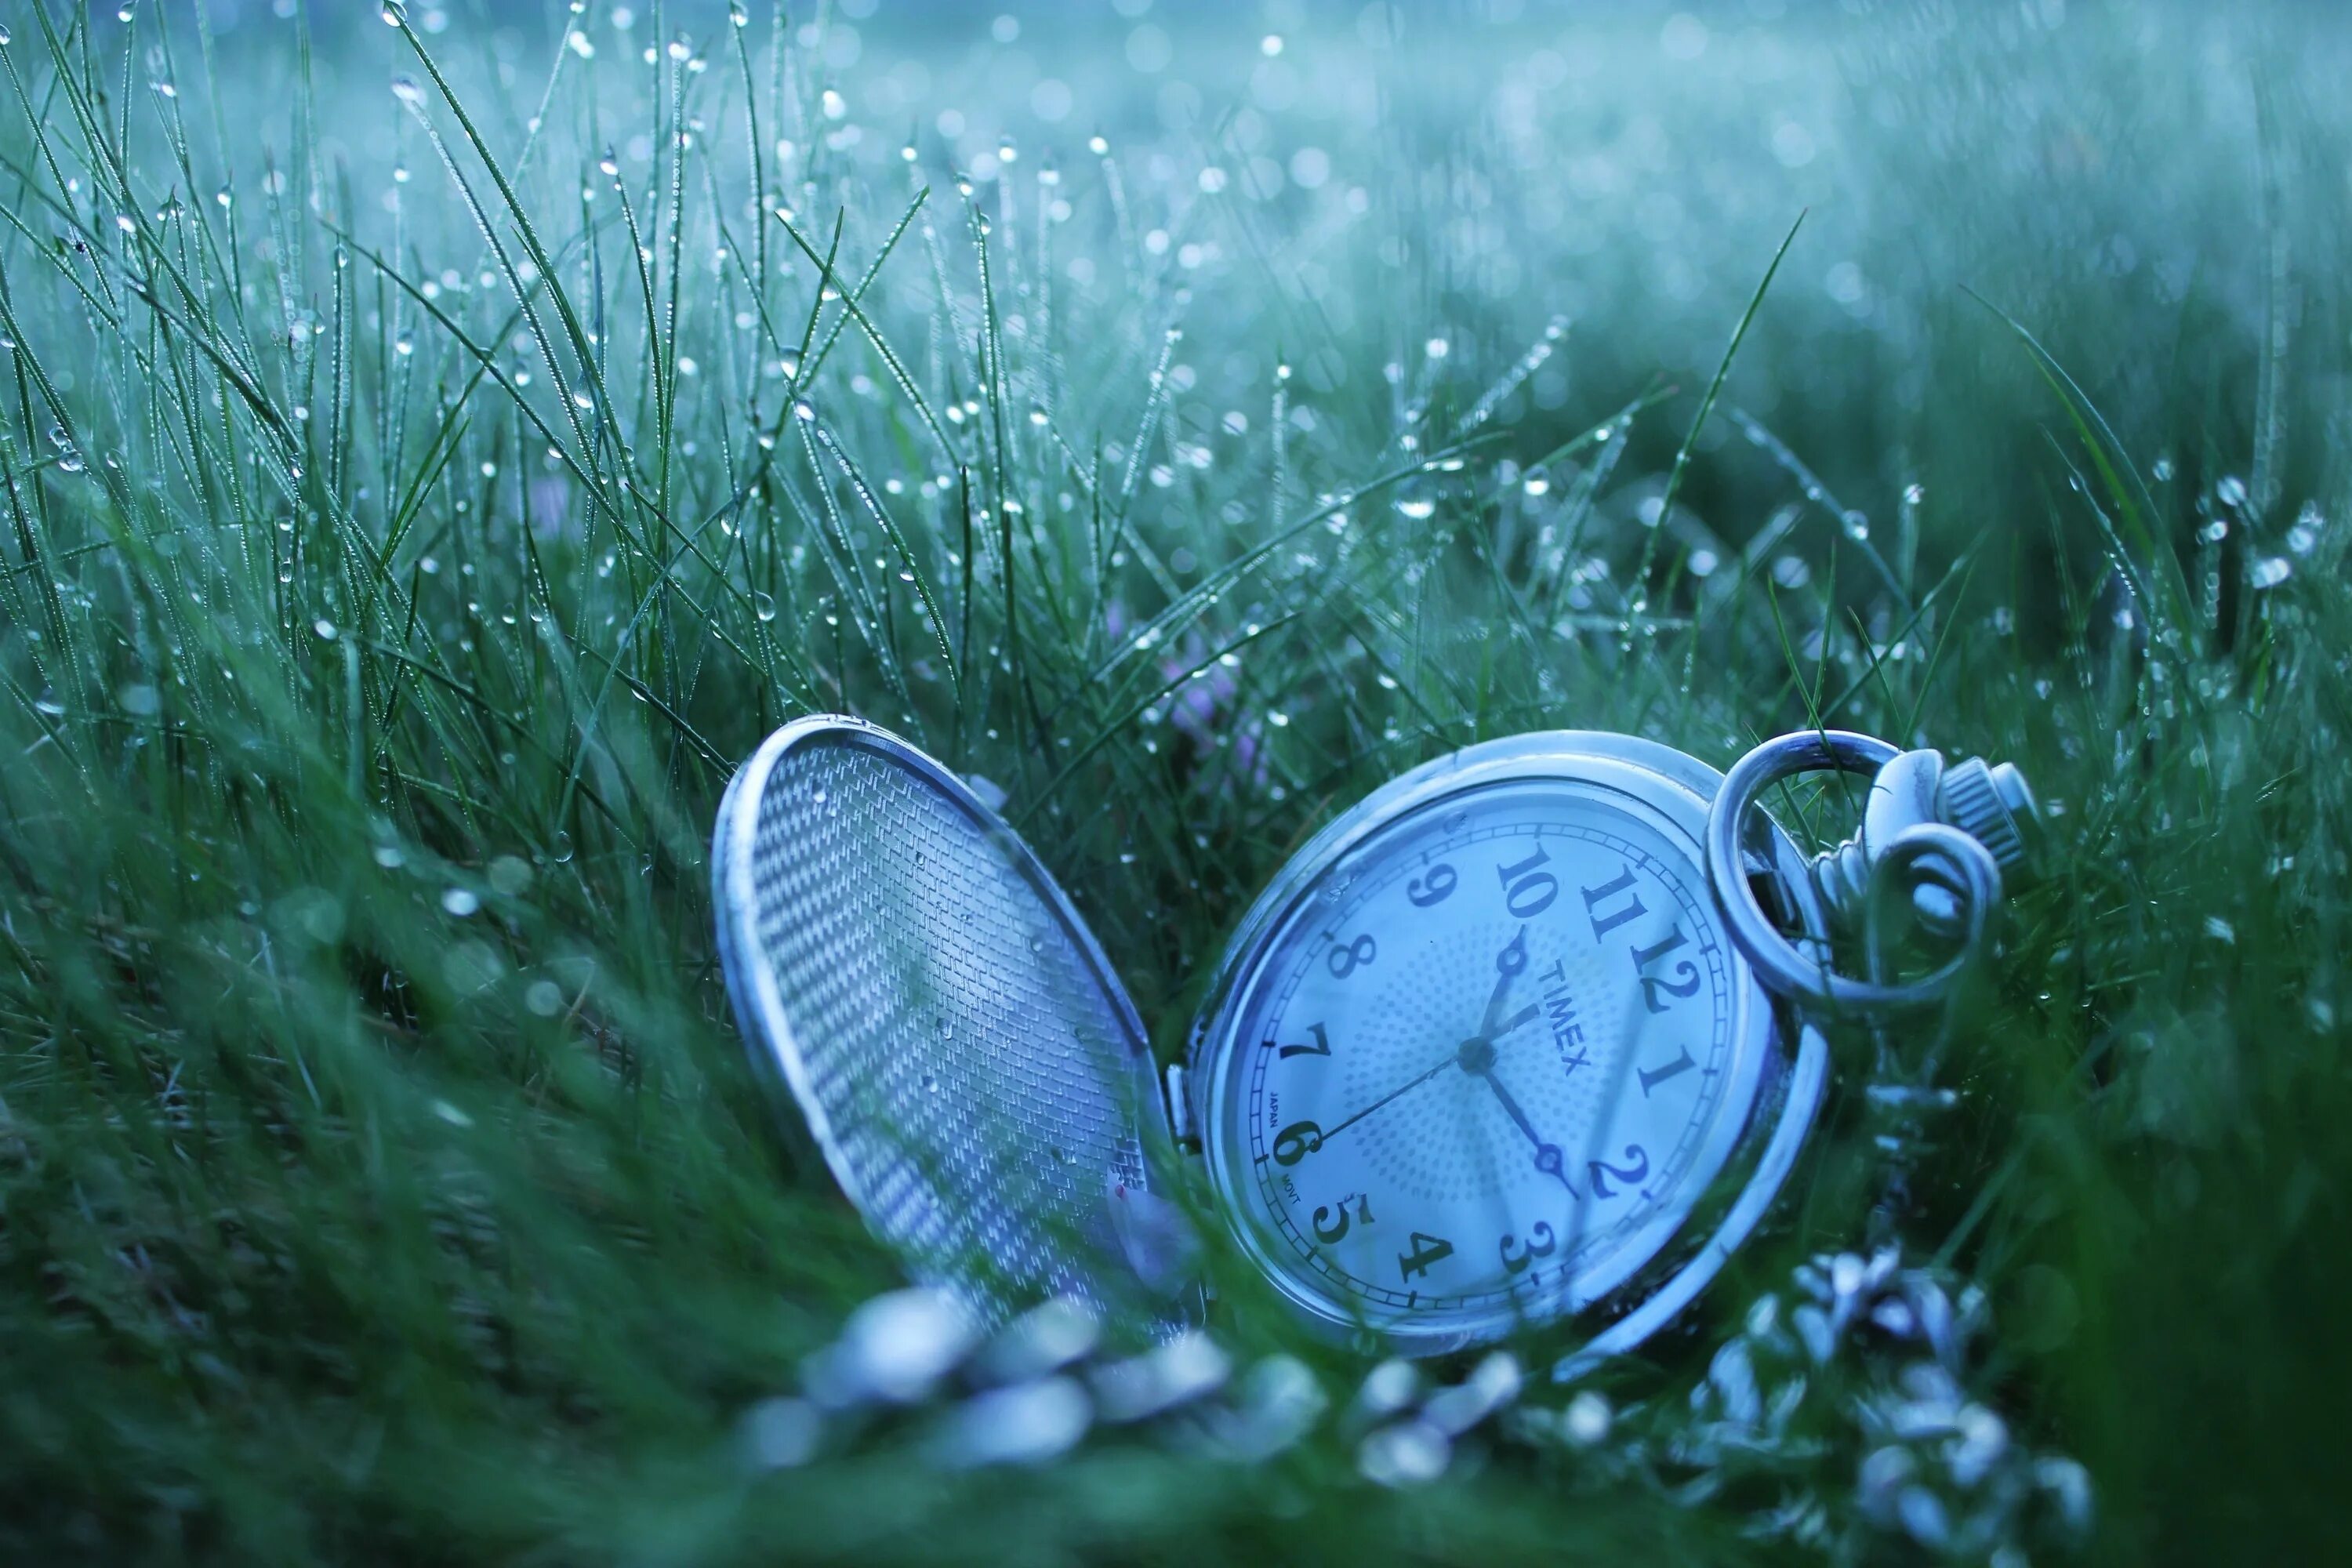 Картинка времени на телефон. Часы на природе. Часы на фоне природы. Время на природе. Красивые часы на природе.